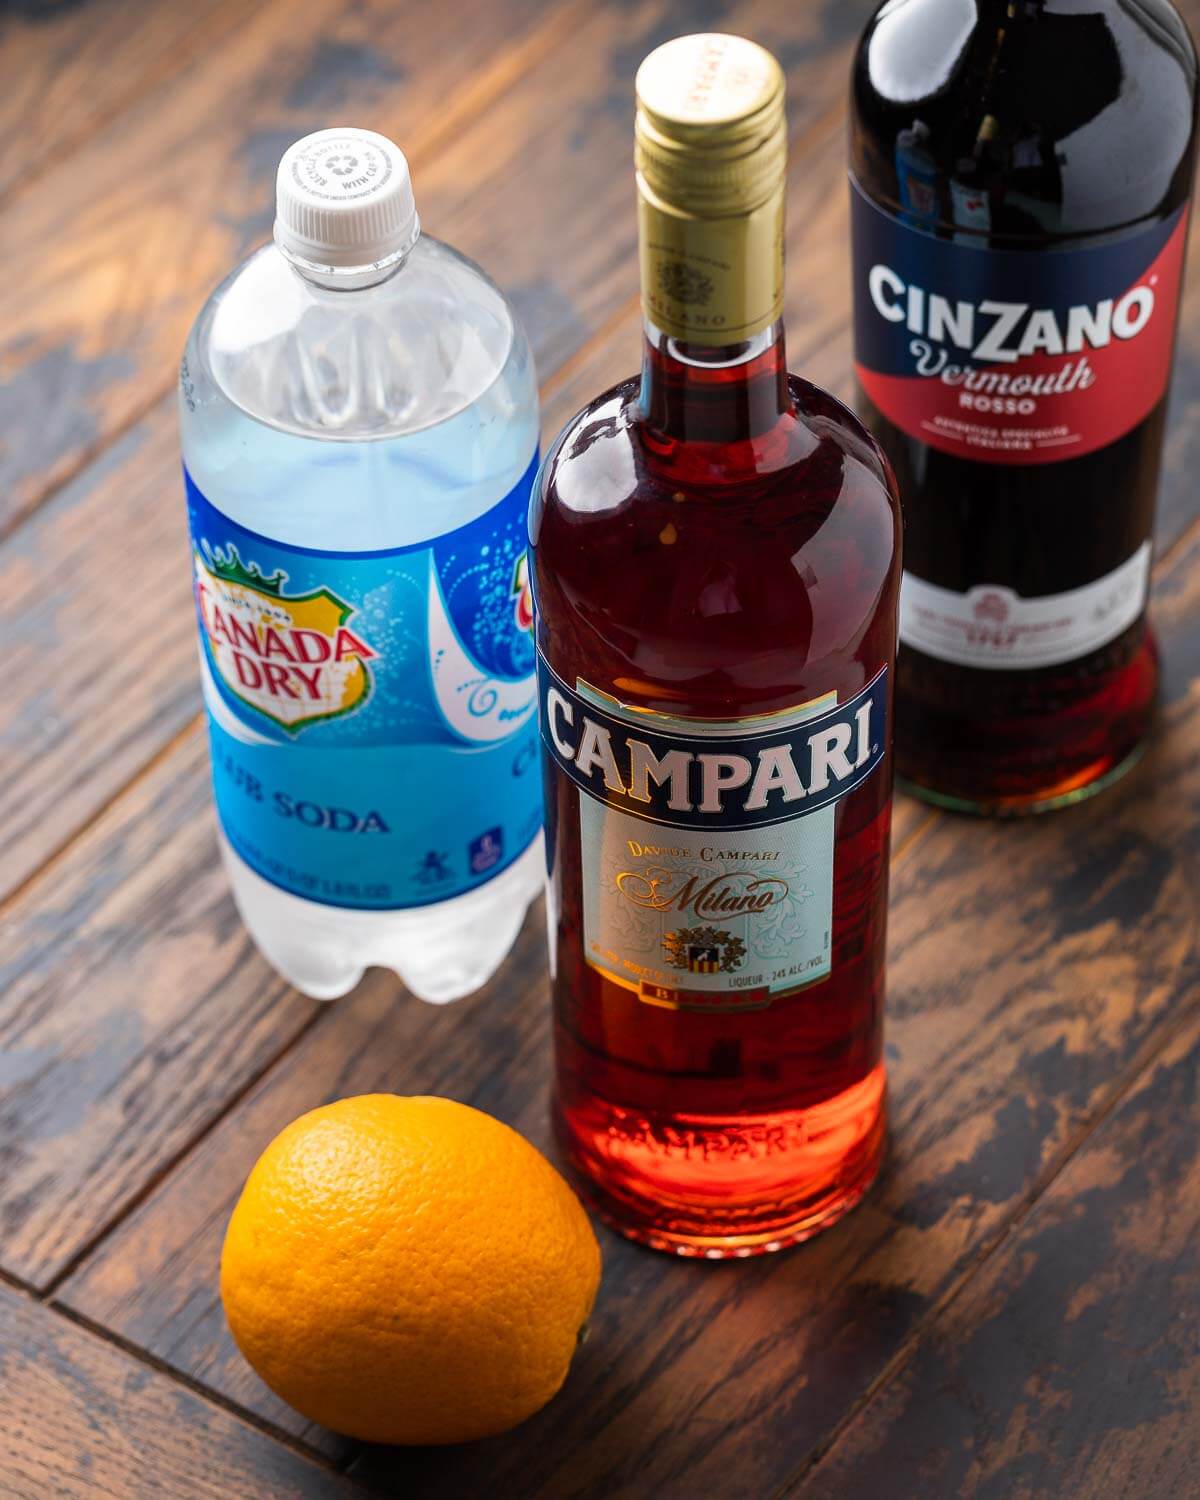 Ingredients shown: club soda, sweet vermouth, campari, and an orange.